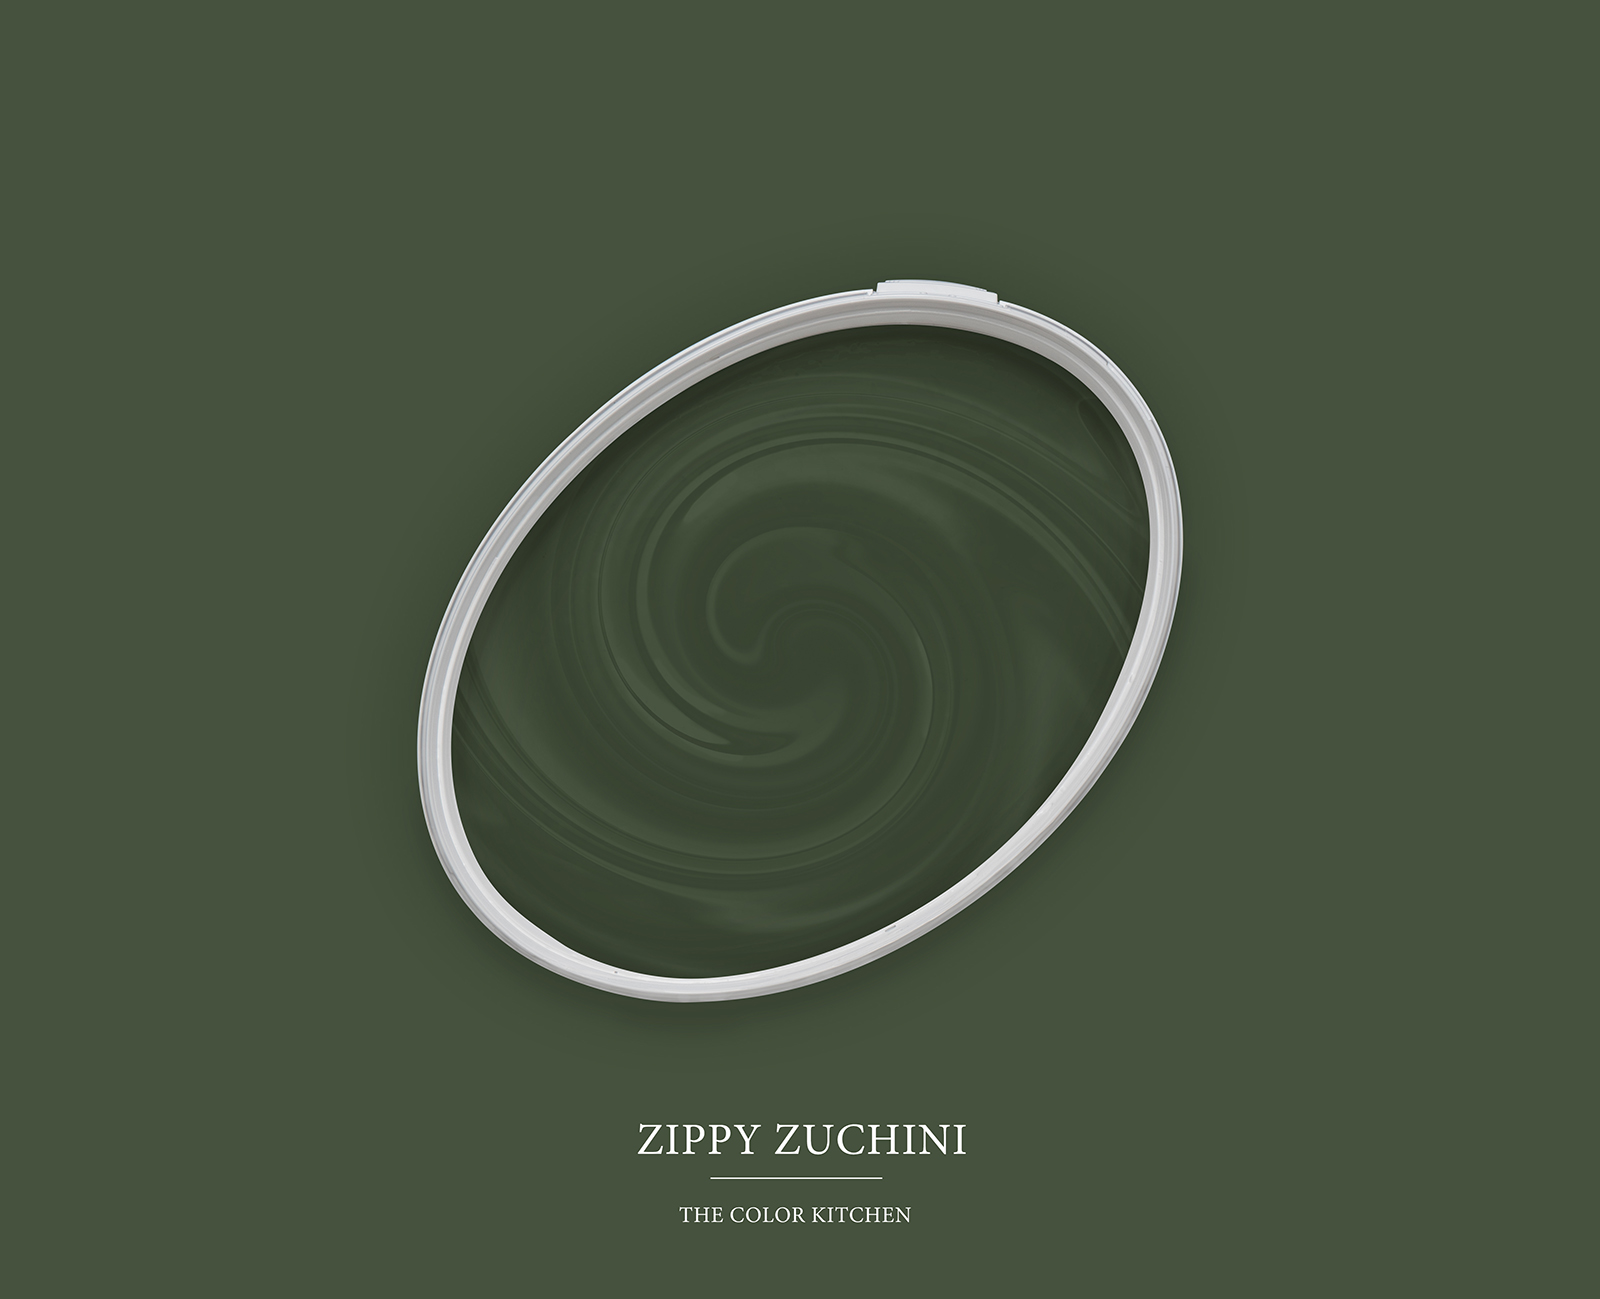 Wall Paint TCK4006 »Zippy Zuchini« in intensive dark green – 5.0 litre
